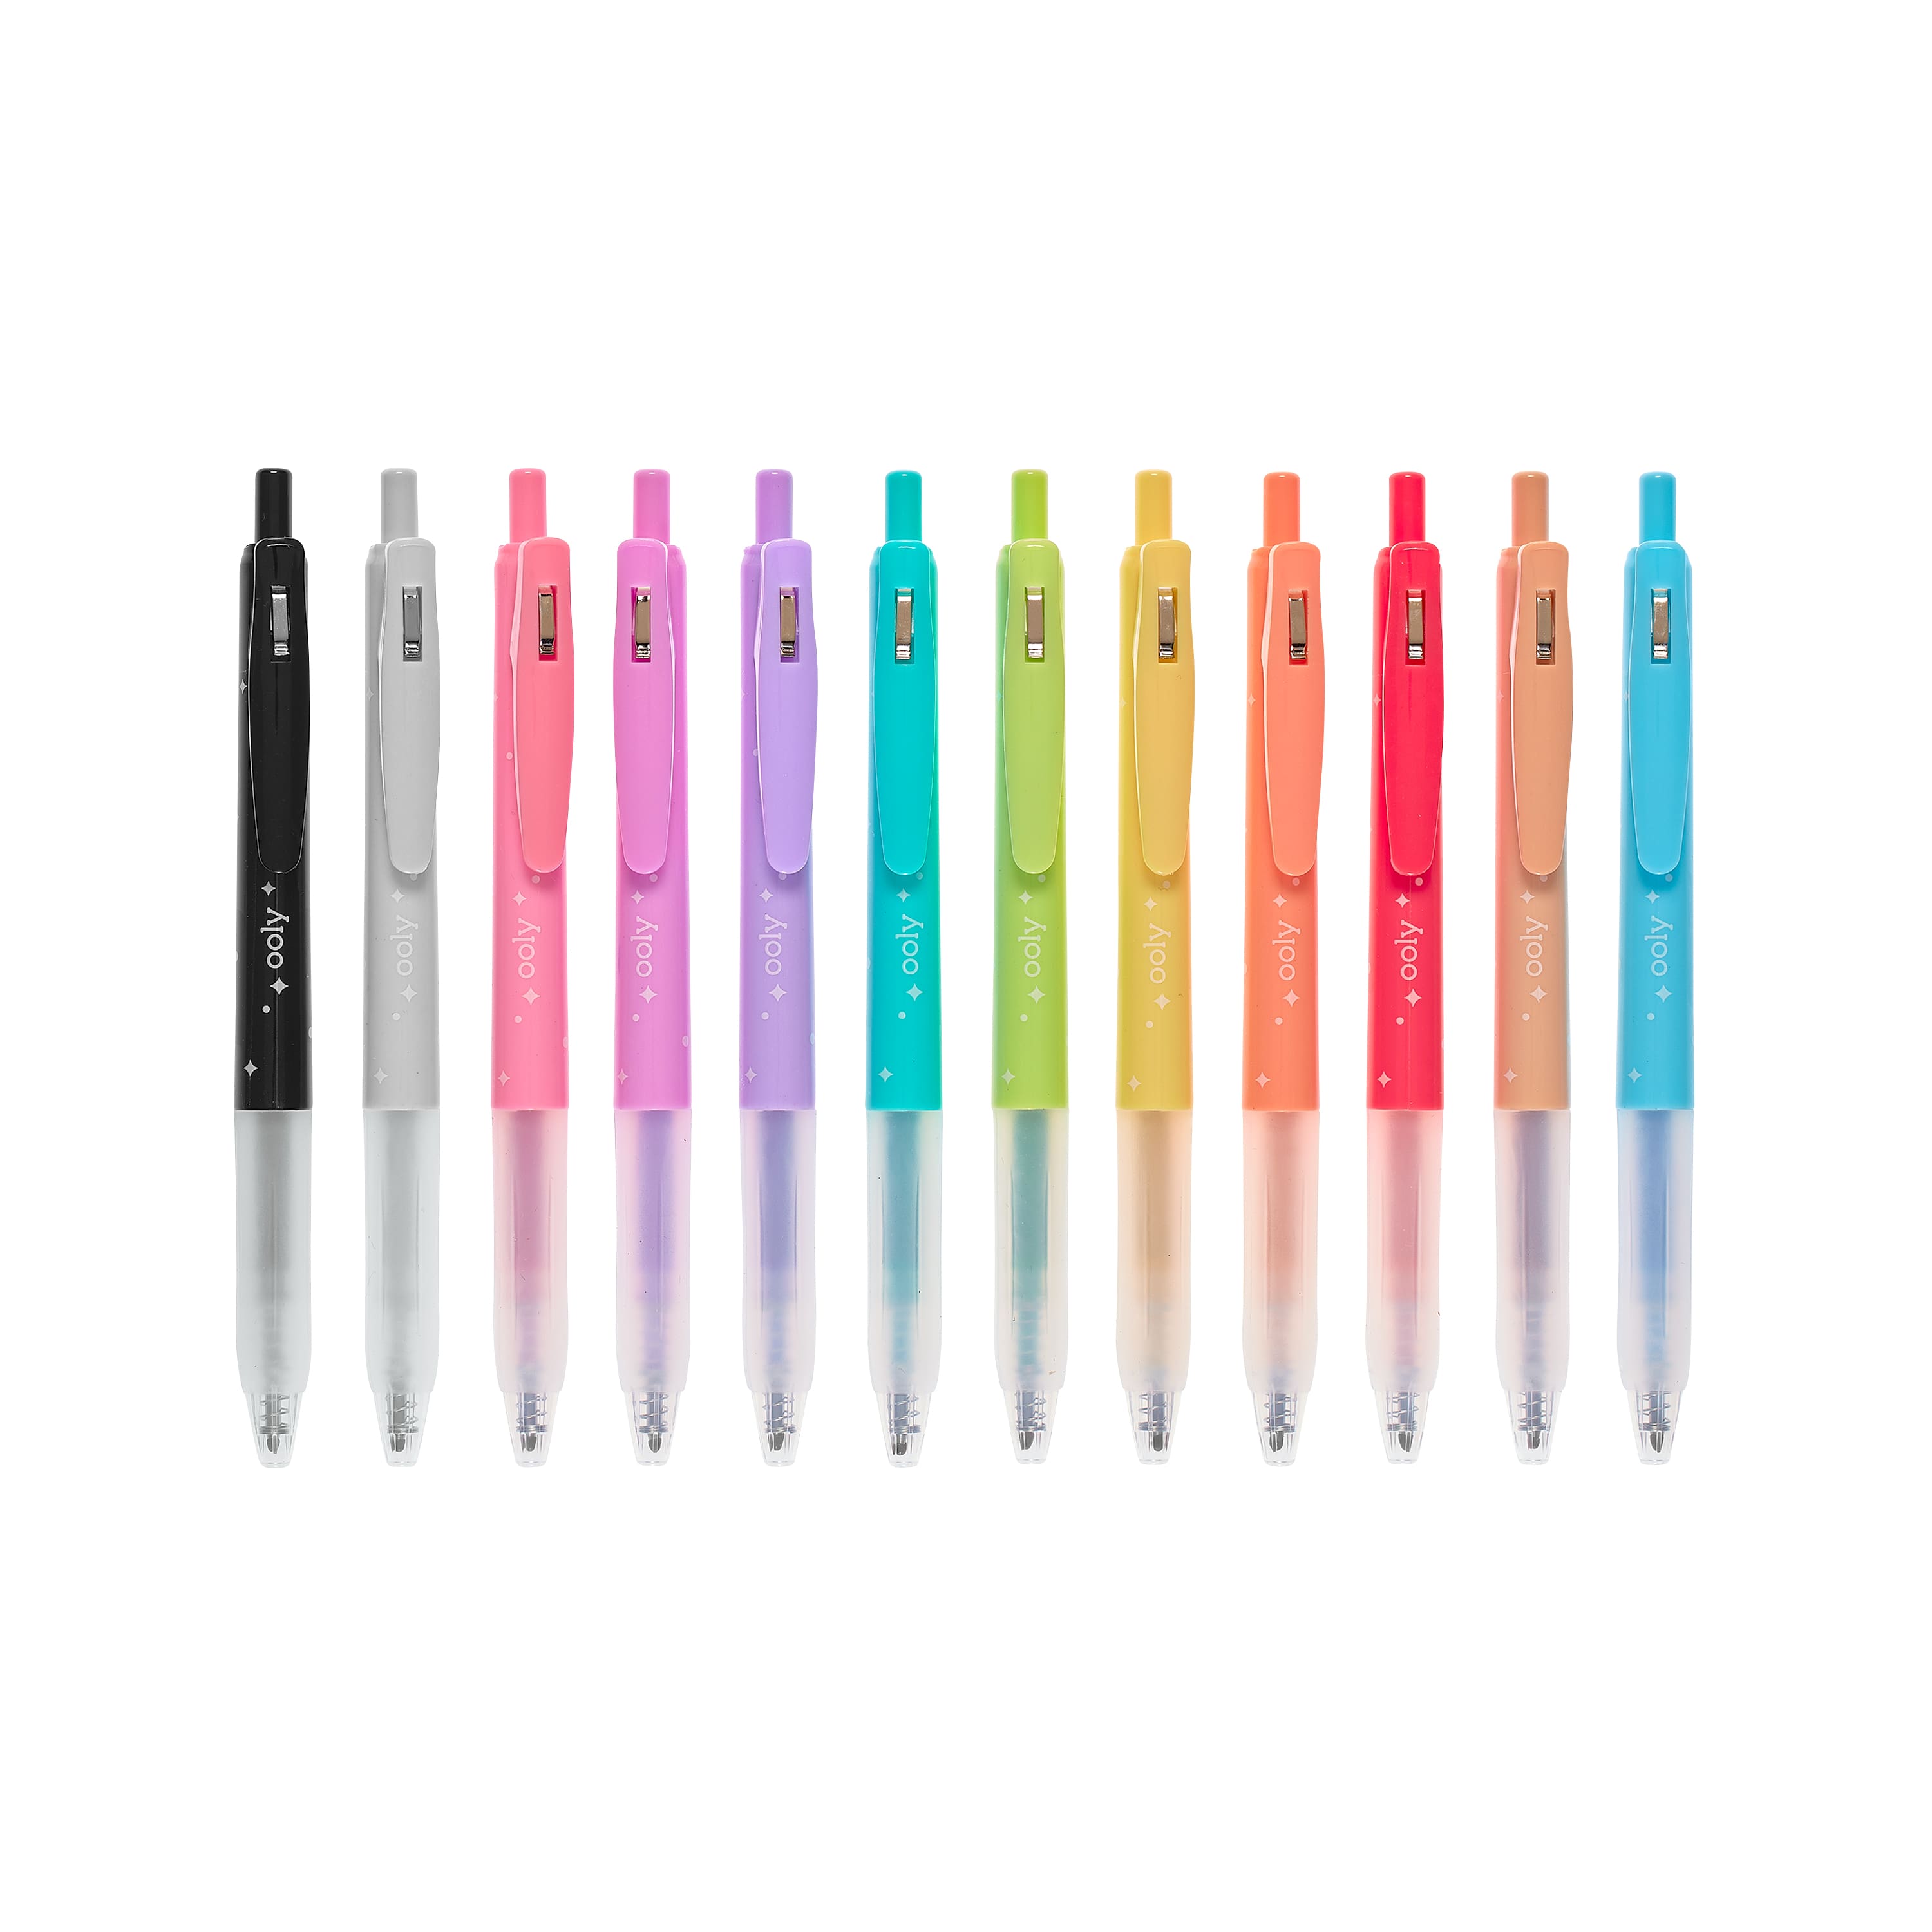 Oh My Glitter! 0.8mm 12 Color Retractable Gel Pen Set